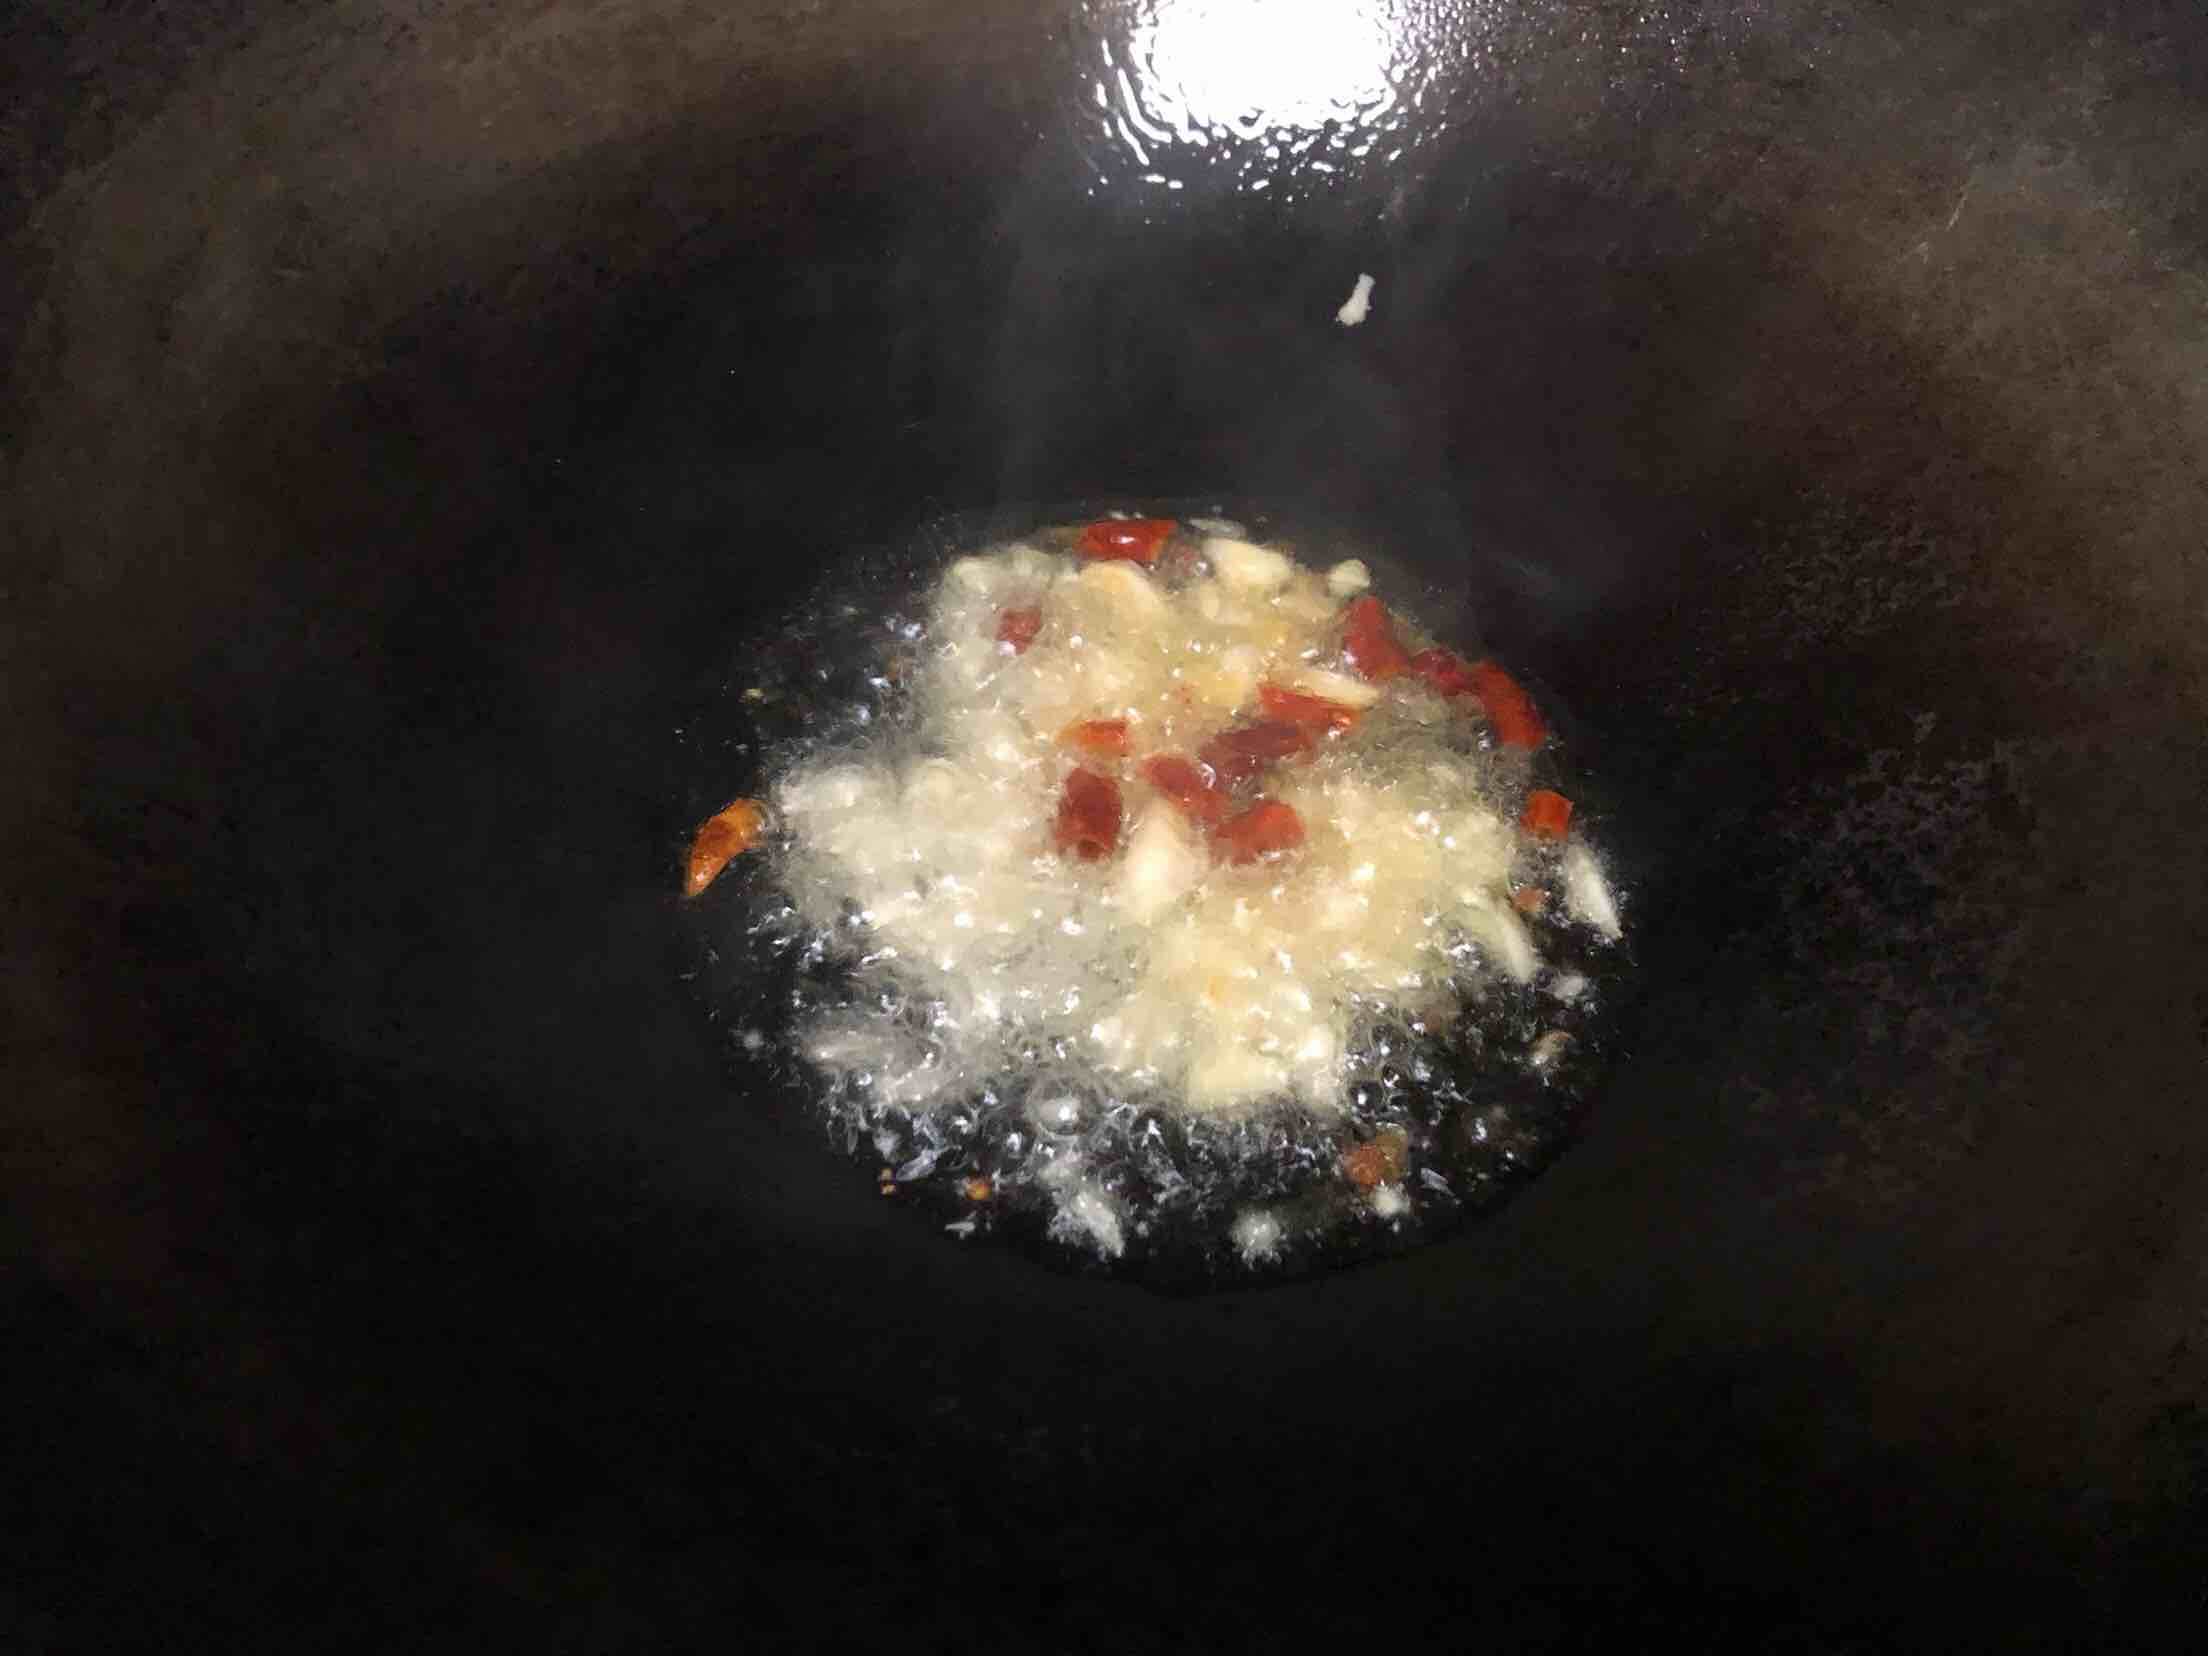 Stir-fried Lettuce recipe